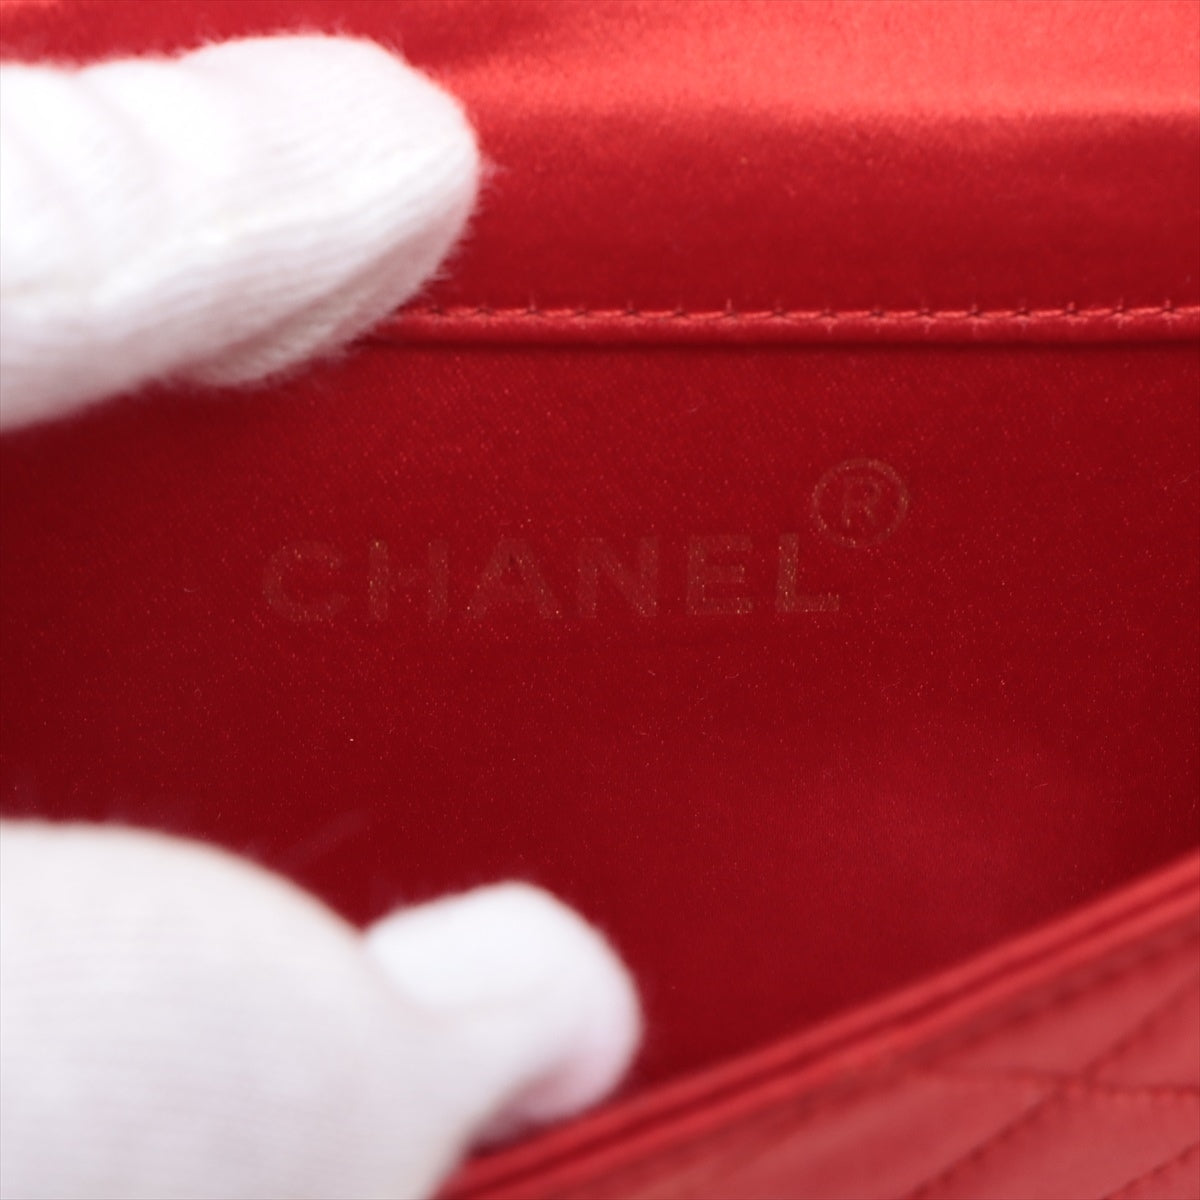 Chanel Mini Mattress Satin Chain Shoulder Bag Red Gold  1st